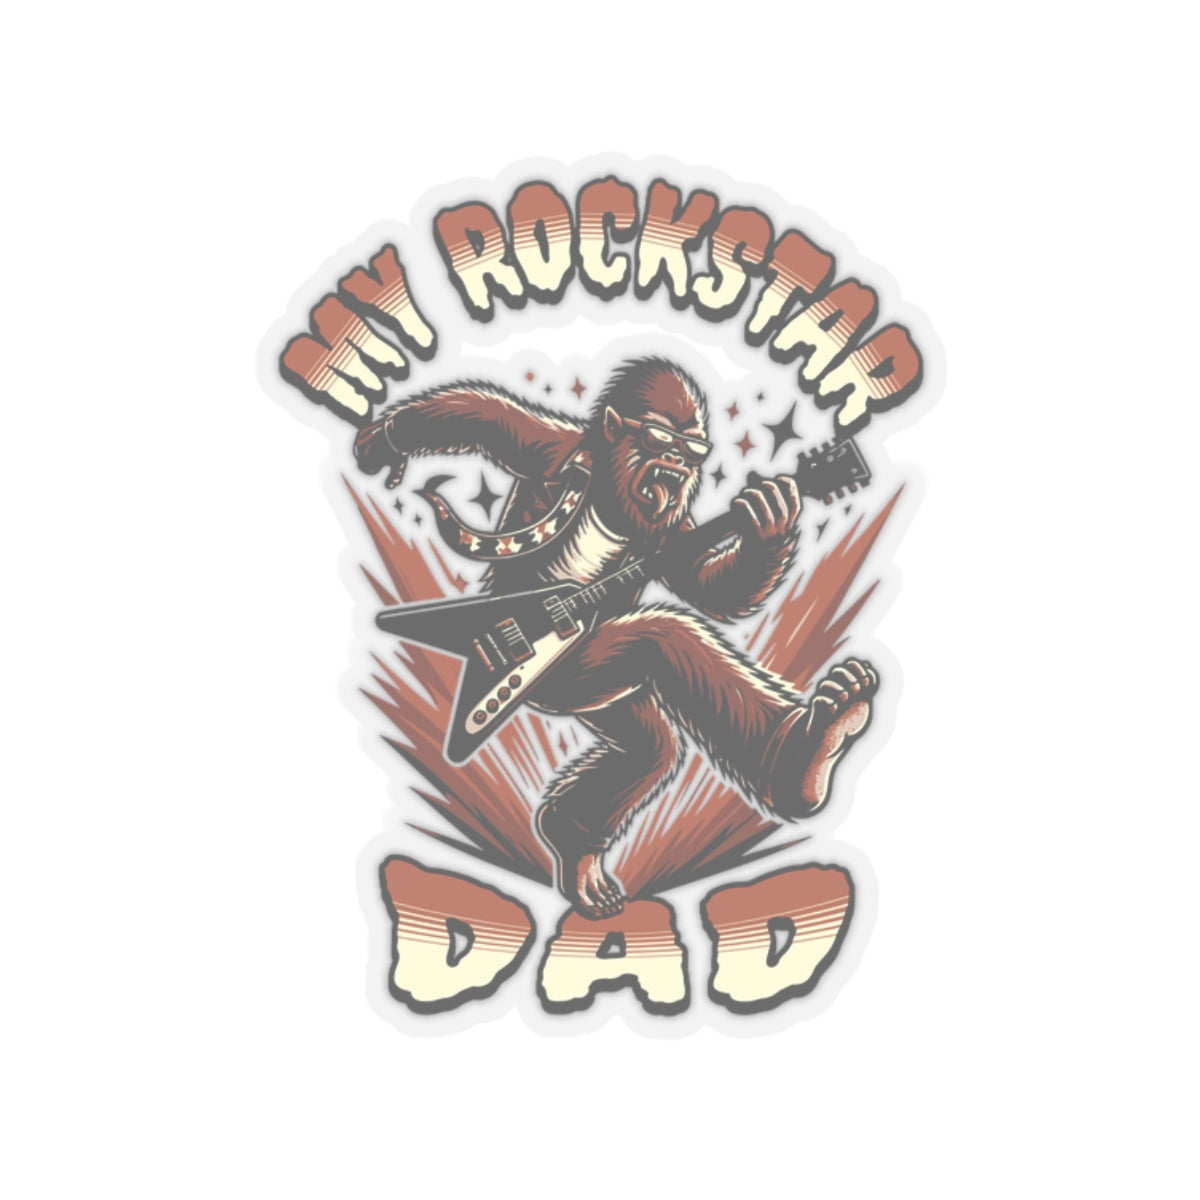 My Rockstar Dad Sticker | Big Foot Sticker | Father's Day Gift | Dad Sticker | Dad Birthday Gift | Big Foot Playing A Bass Guitar